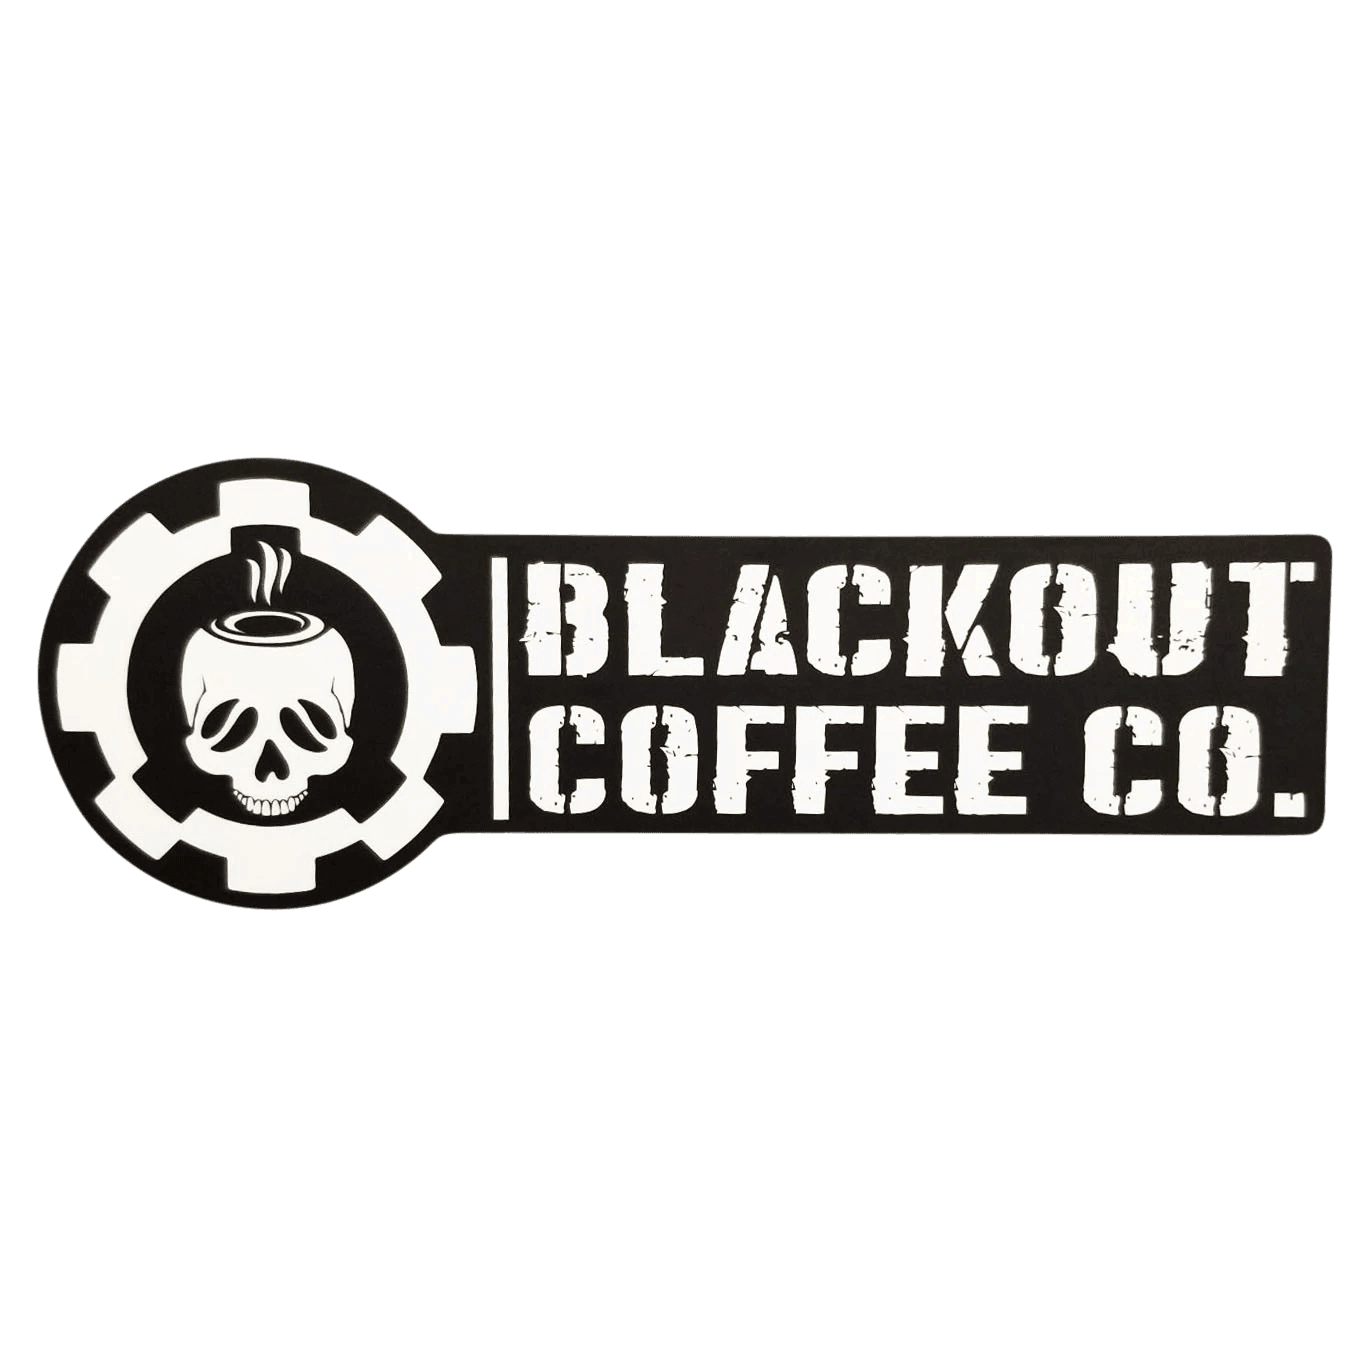 Blackout Coffee Logo Vinyl Decal - Horizontal